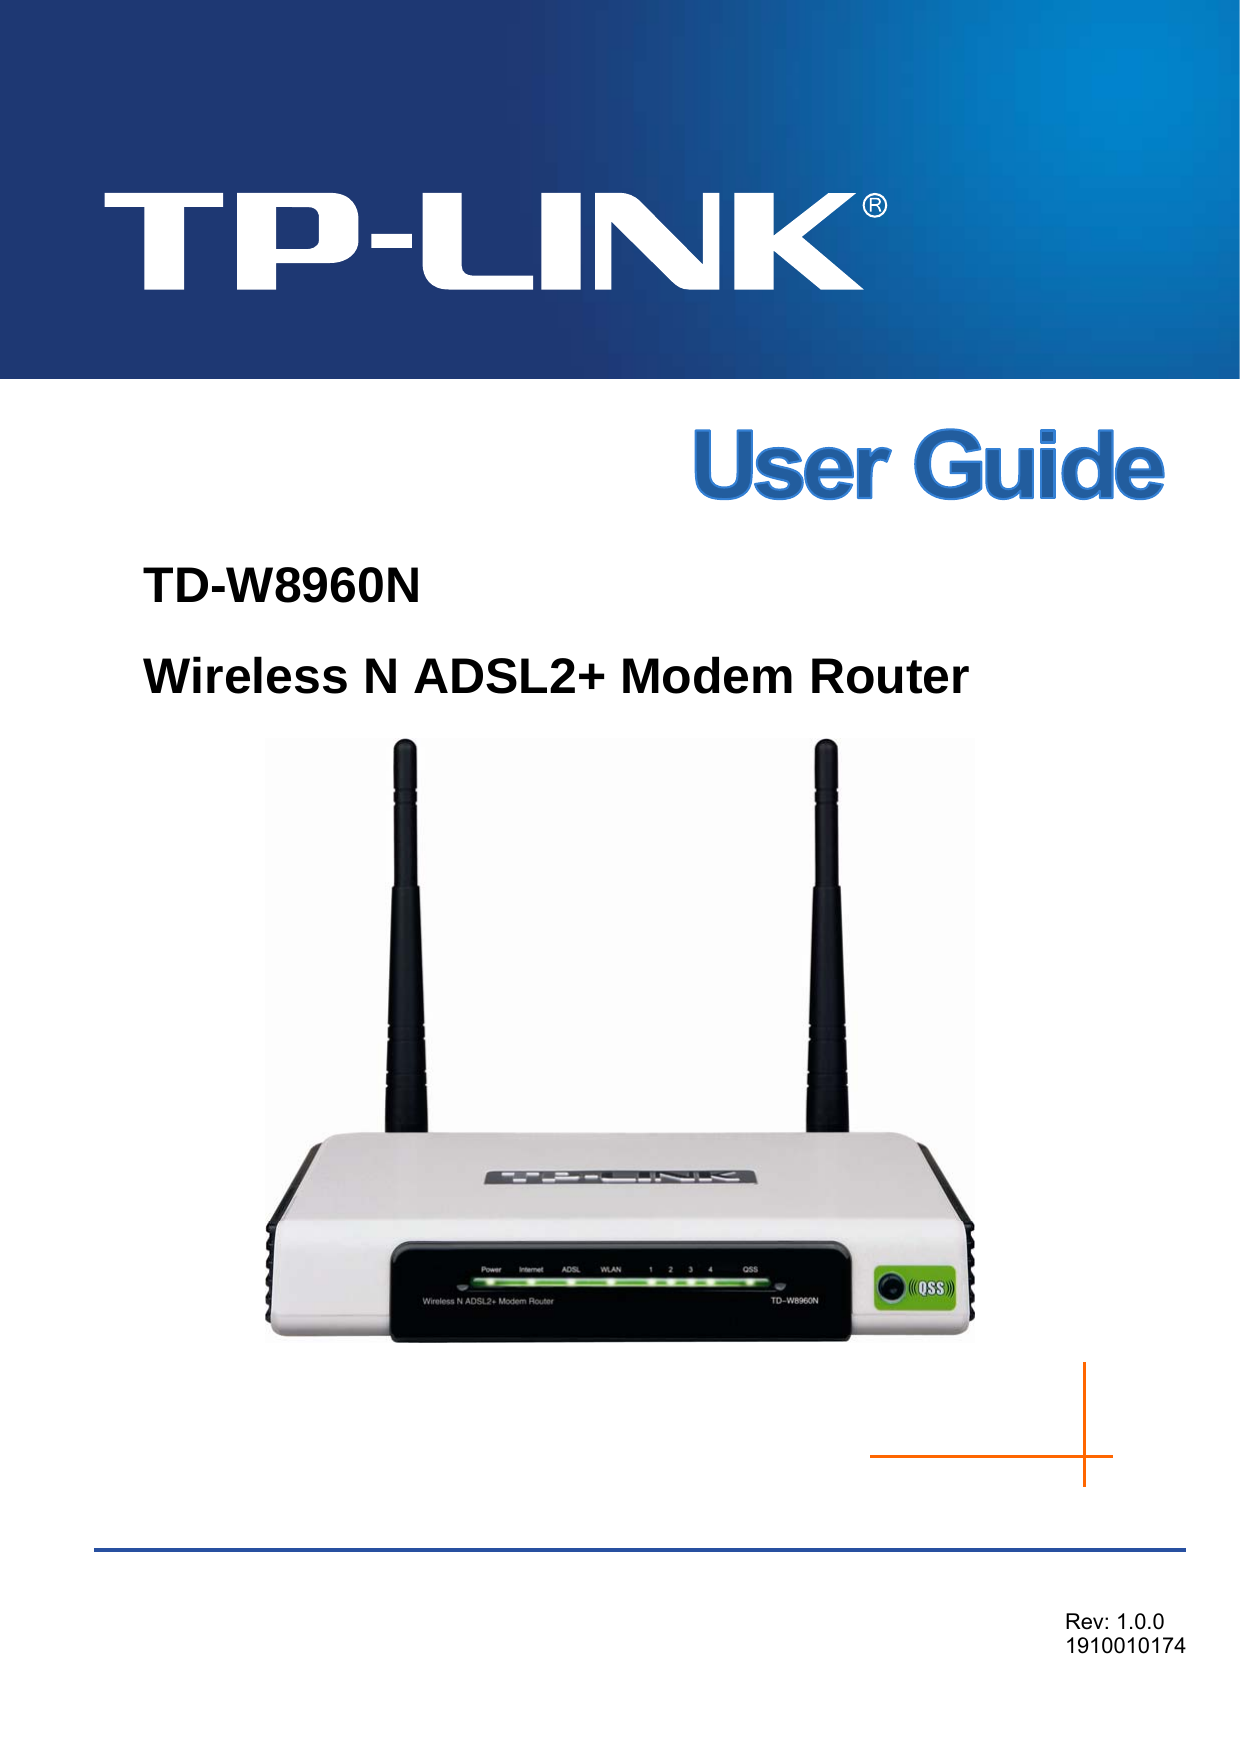   TD-W8960N Wireless N ADSL2+ Modem Router  Rev: 1.0.0 1910010174 